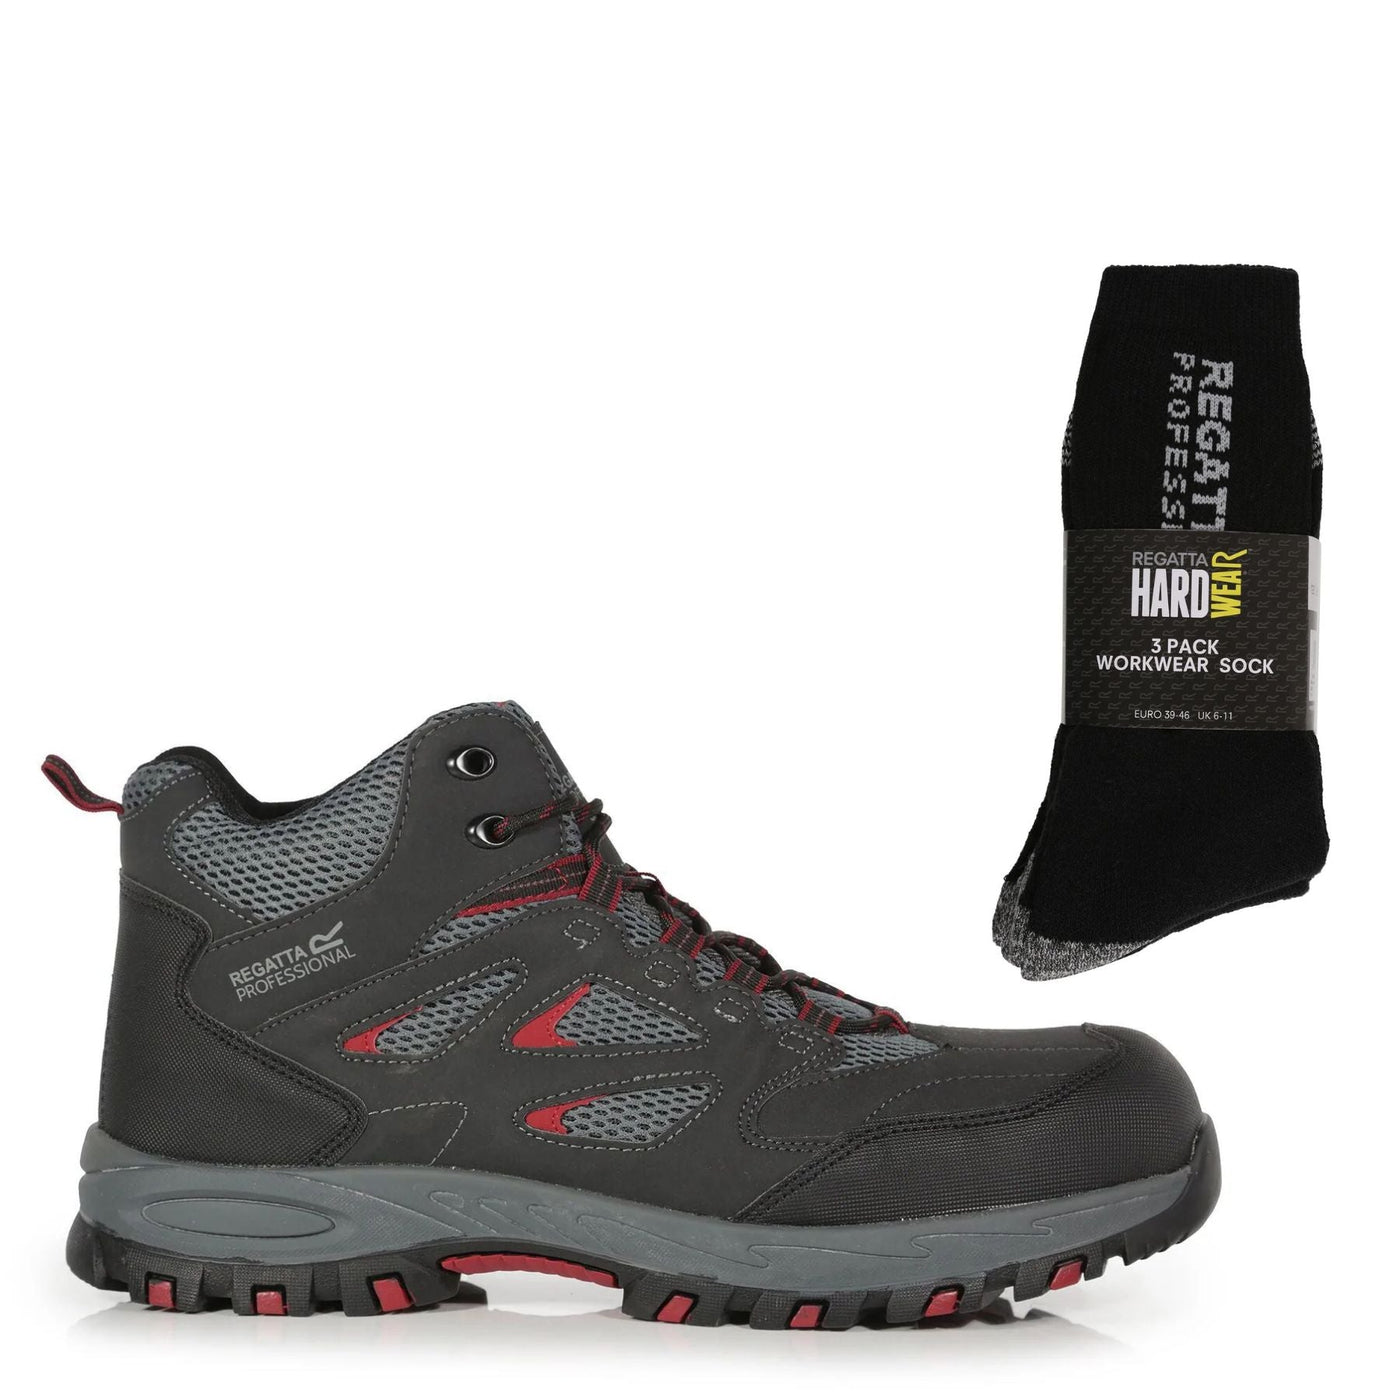 Regatta Professional Special Offer Pack - Mens Mudstone Safety Hiker Boots + 3 Pack Work Socks